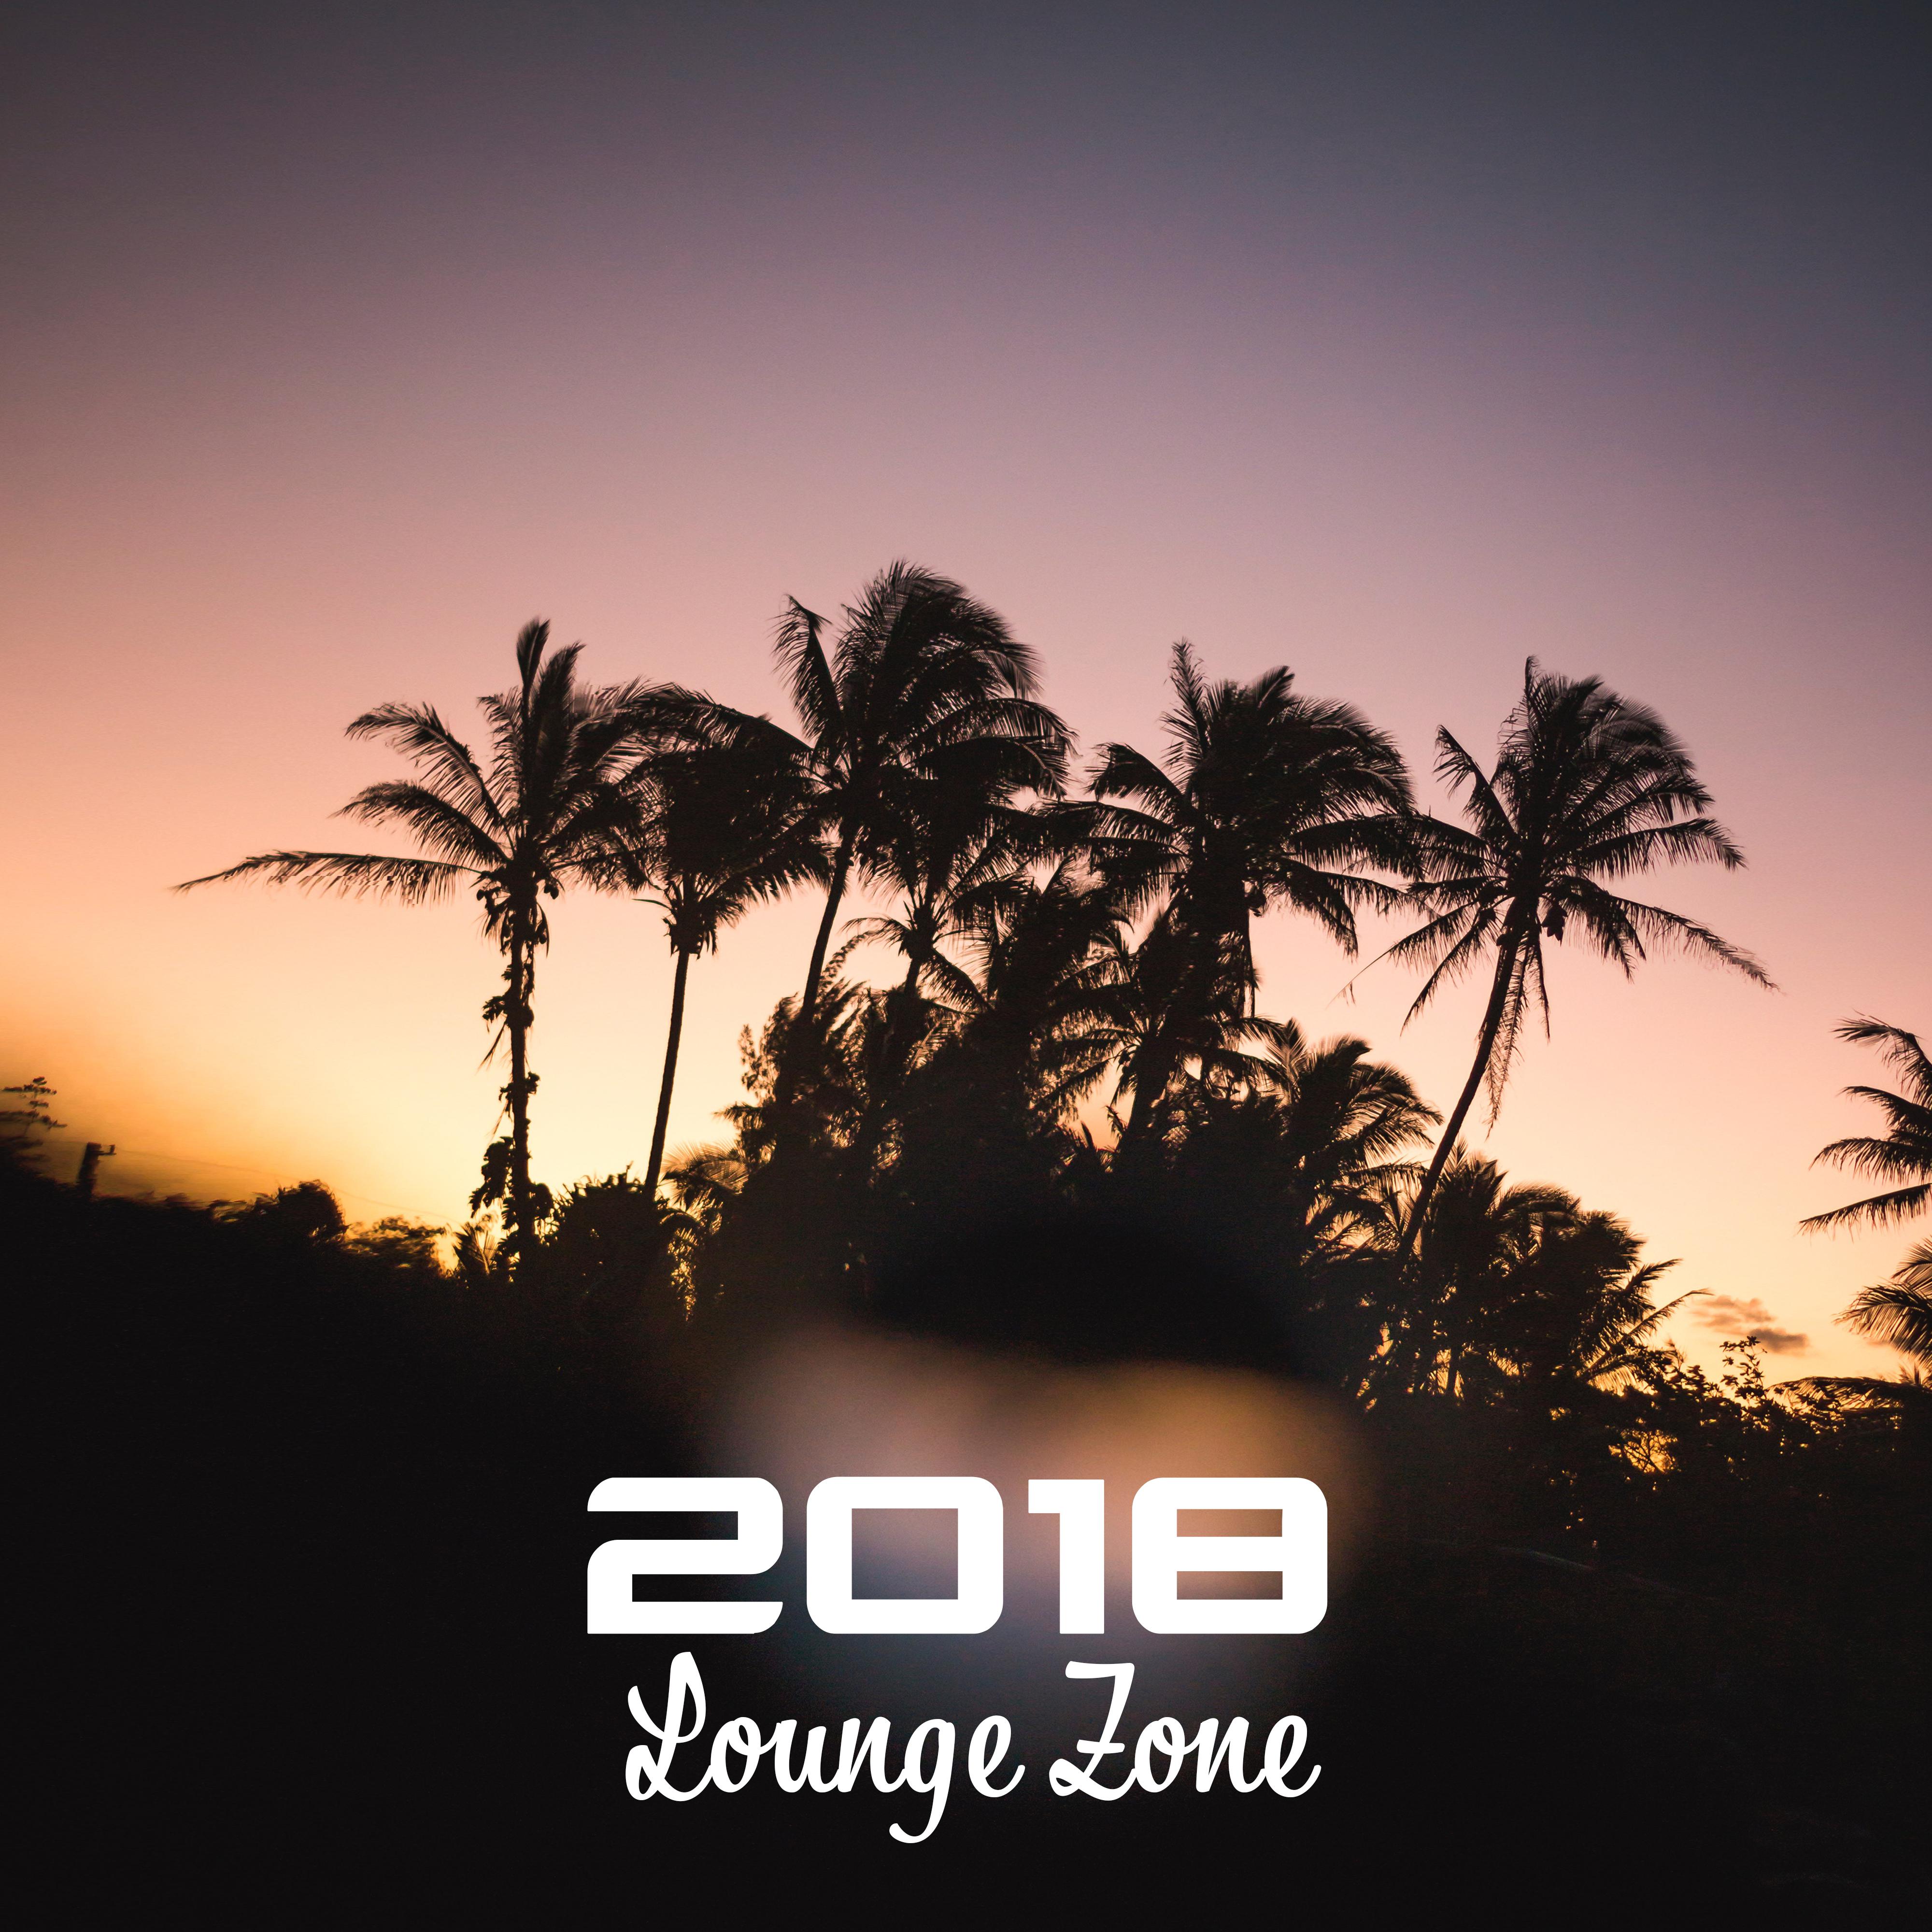 2018 Lounge Zone